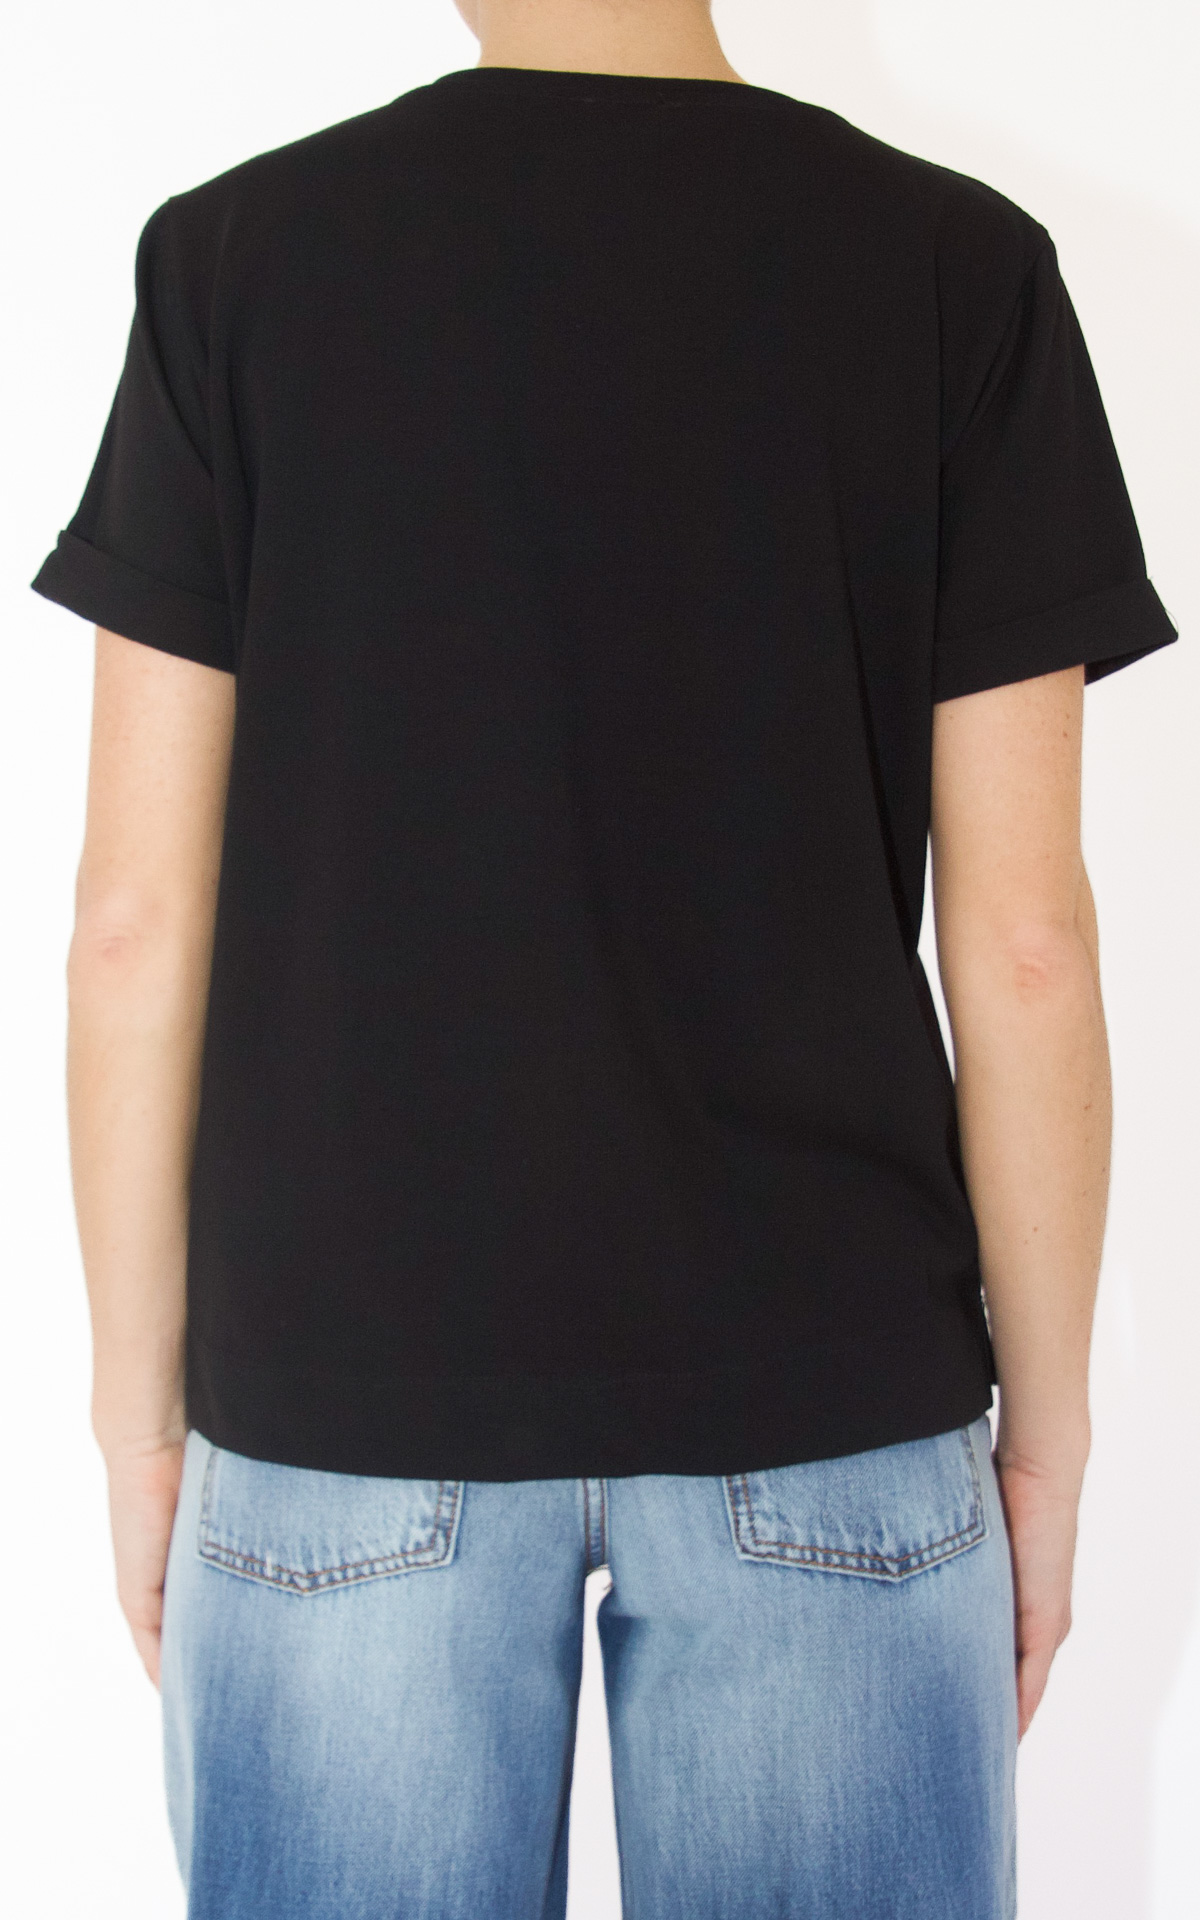 Off-On - t-shirt girocollo - nero